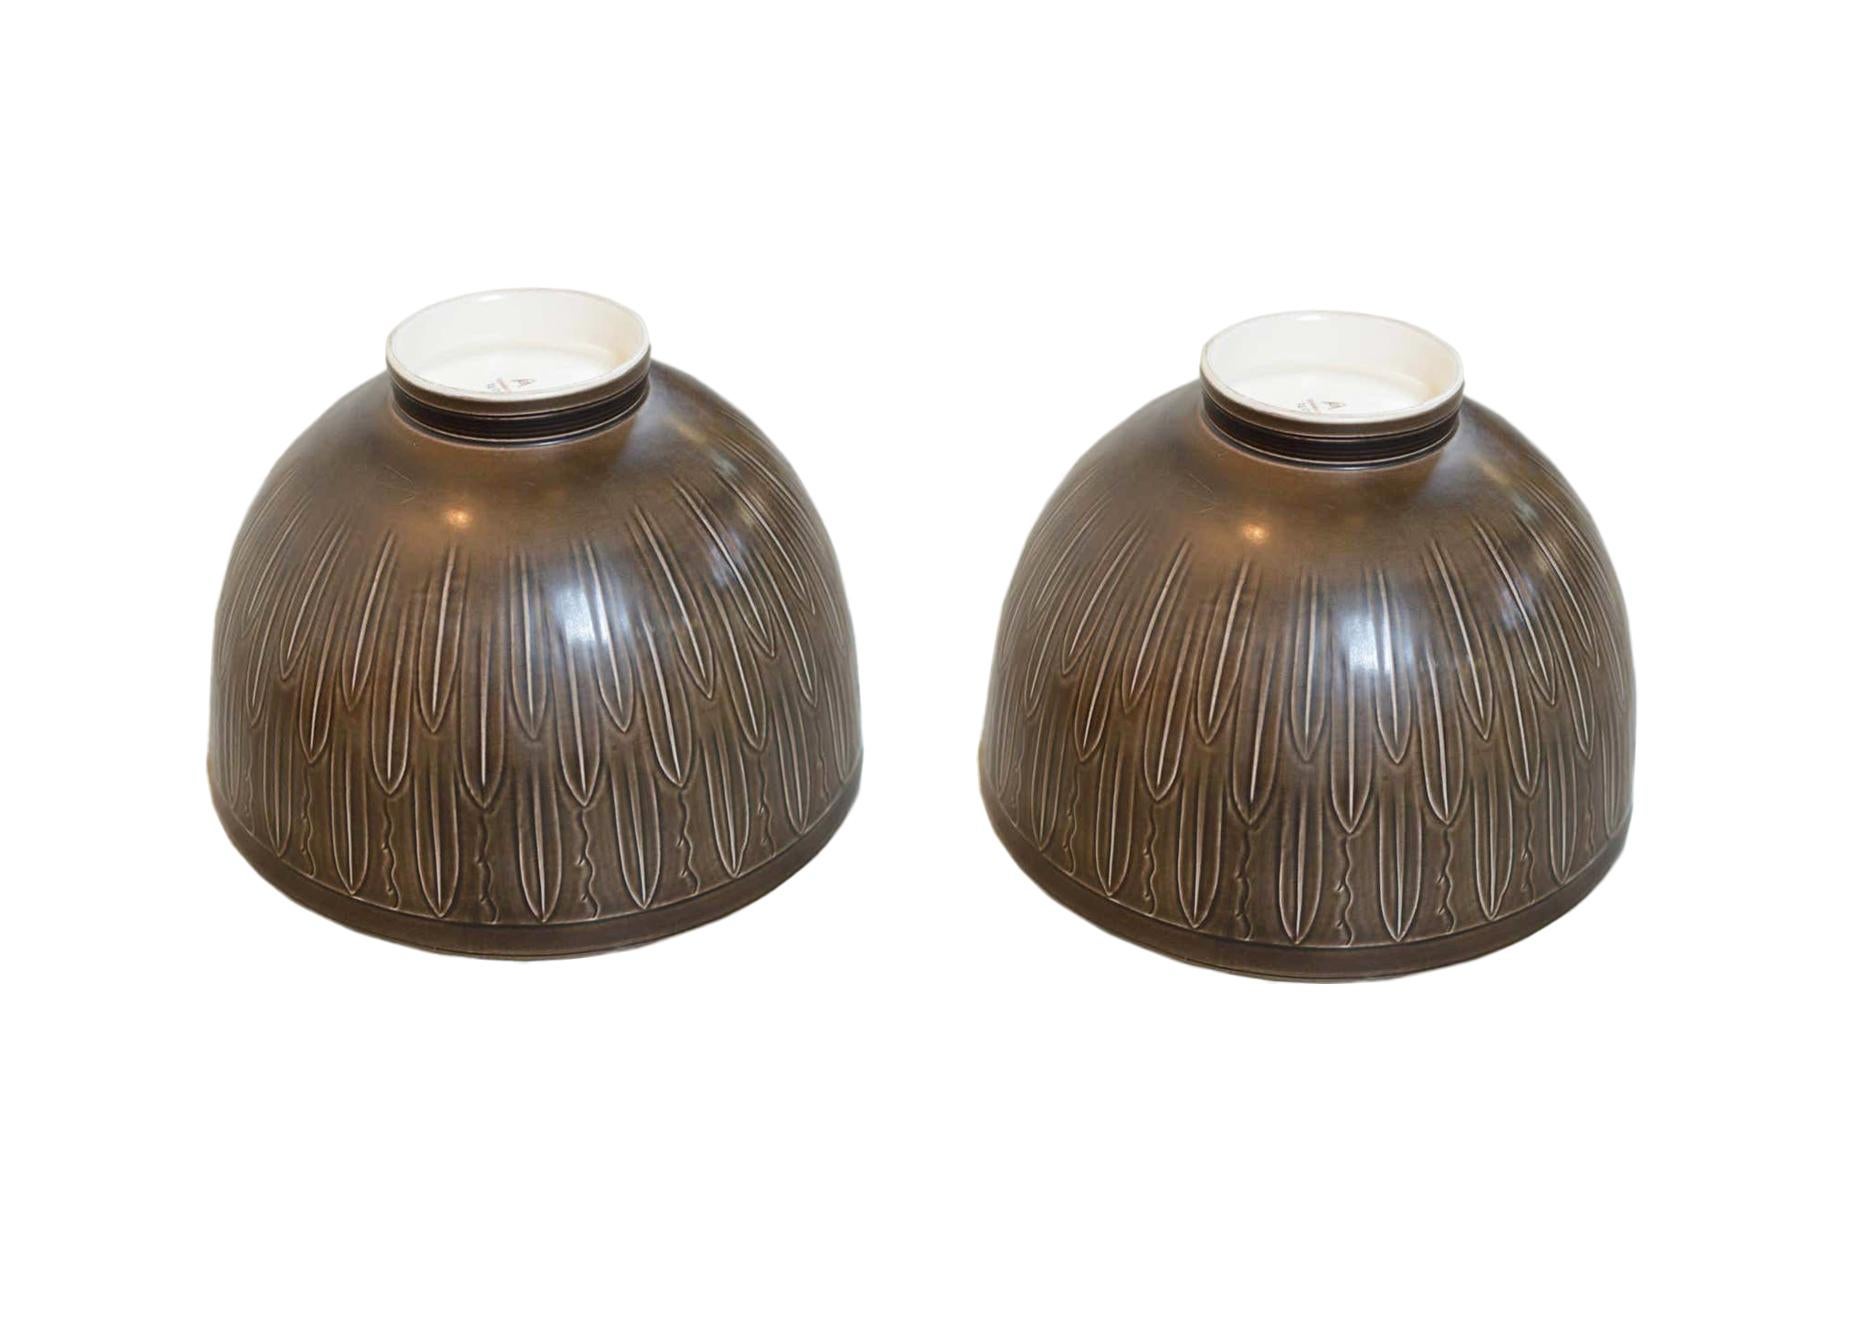 Nils Johan Thorvald Thorsson Ceramic bowls for Aluminia 1930s Sweden For Sale 2